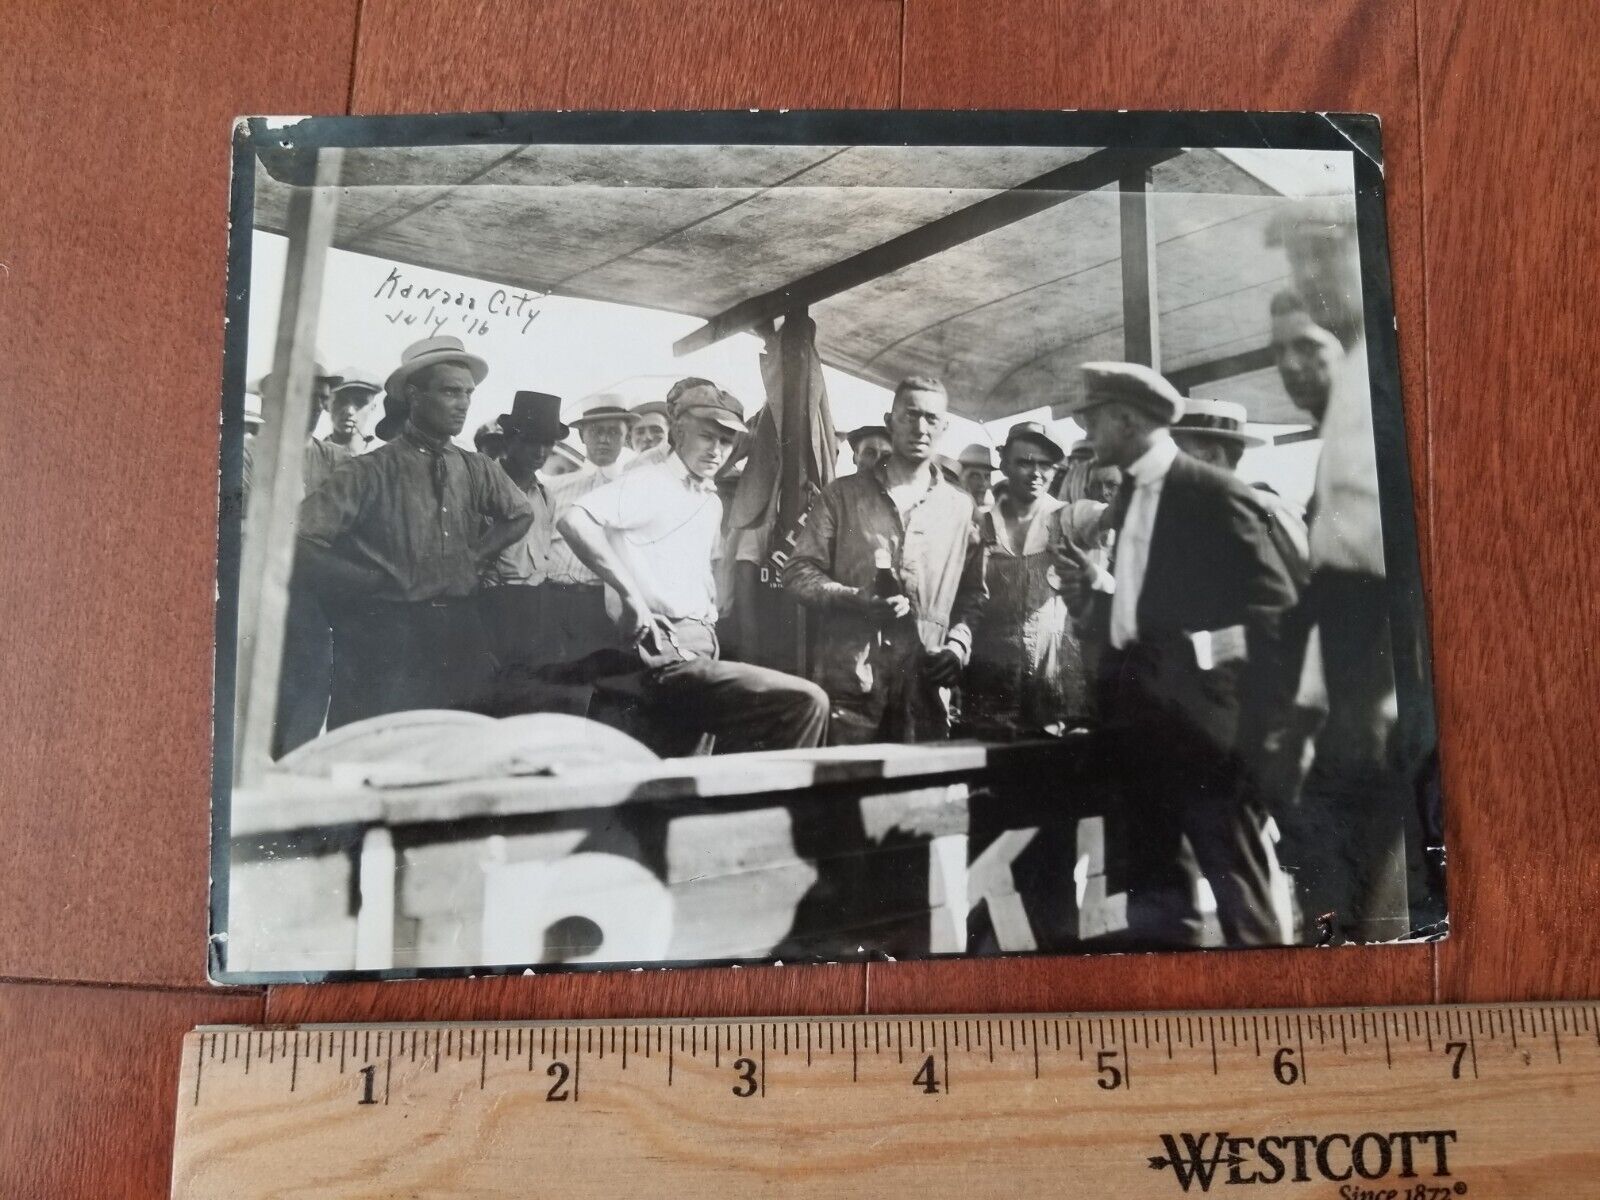 1916 Kansas City Auto Race Photograph